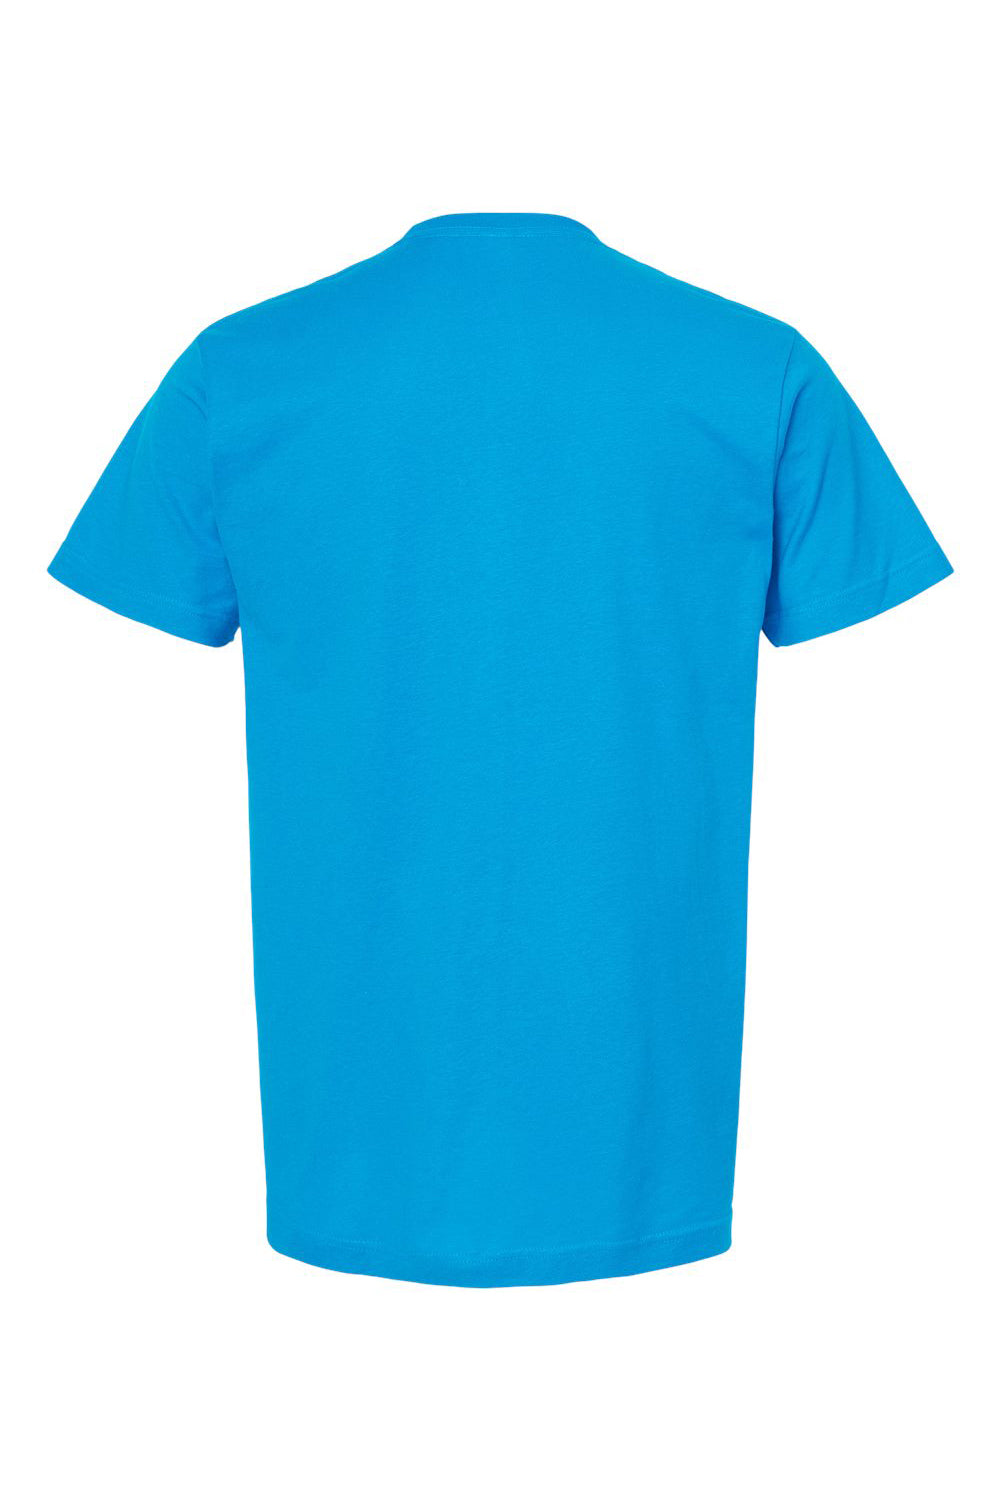 Tultex 202 Mens Fine Jersey Short Sleeve Crewneck T-Shirt Turquoise Blue Flat Back